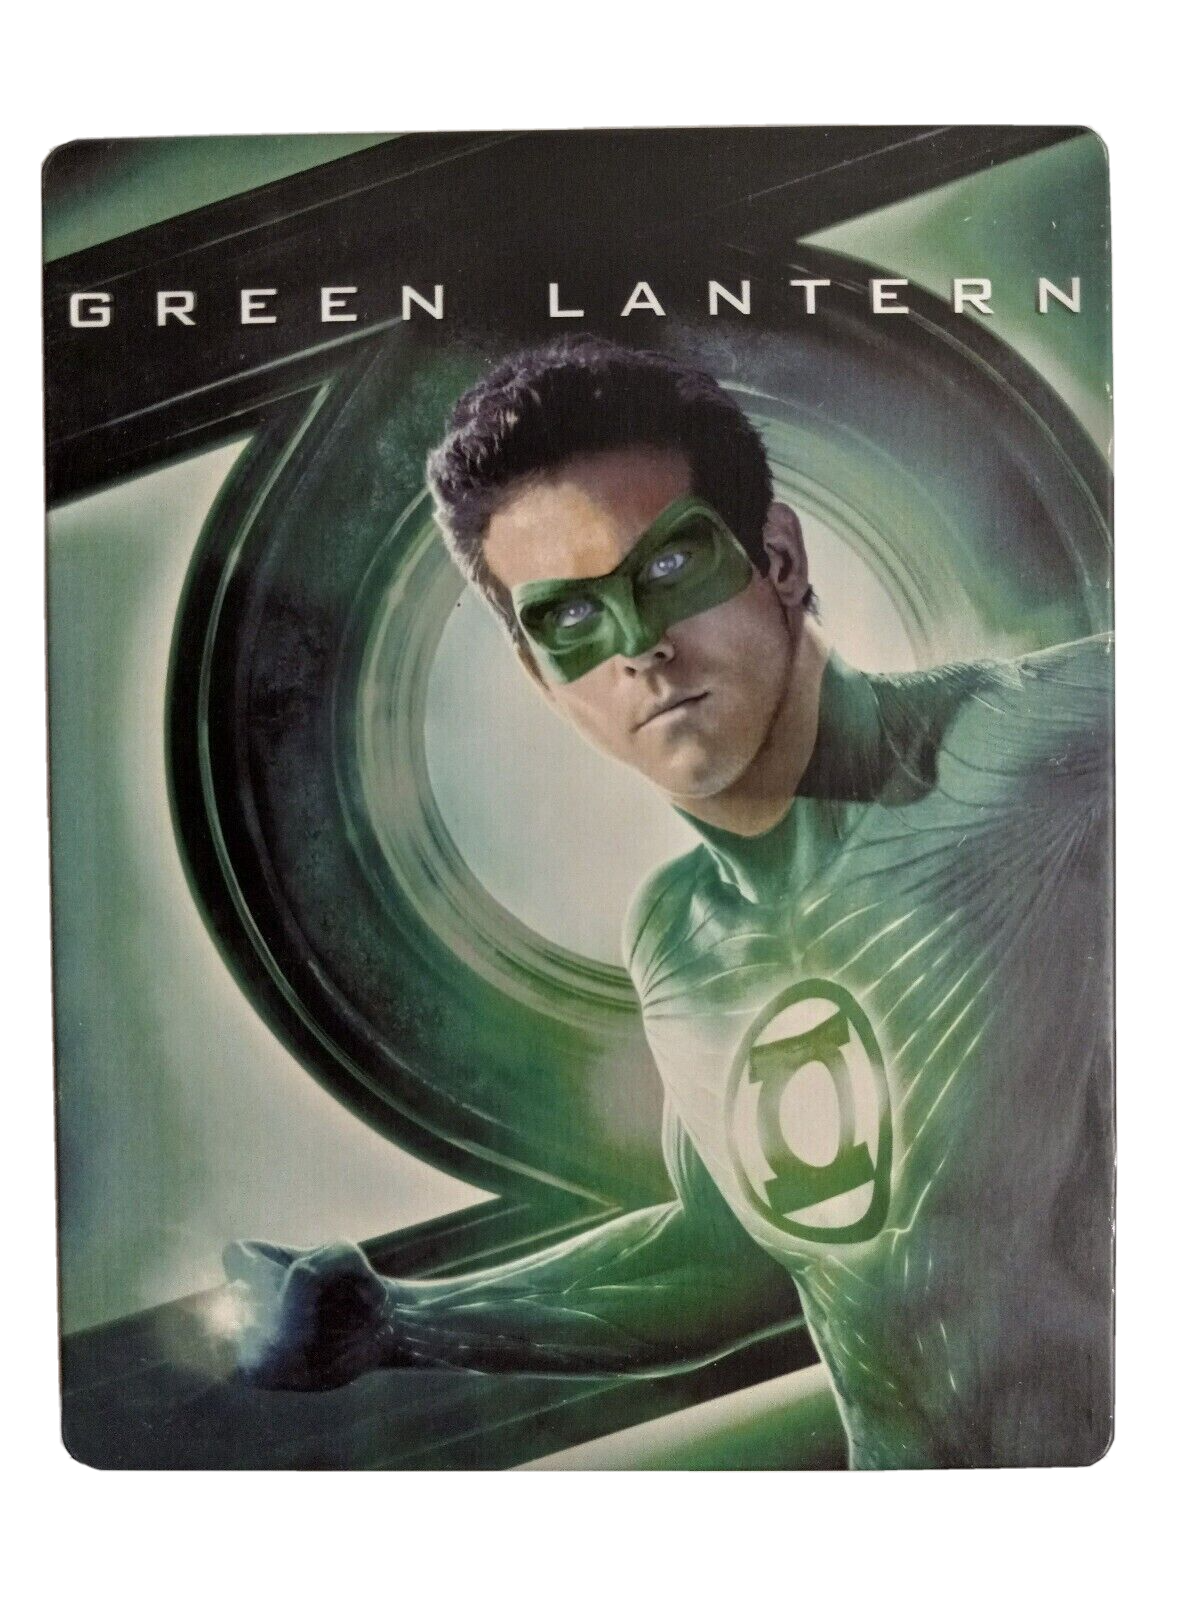 Green Lantern Extended Cut Steelbook (Blu-ray, 2011, DC Comics) w/ Ryan Reynolds